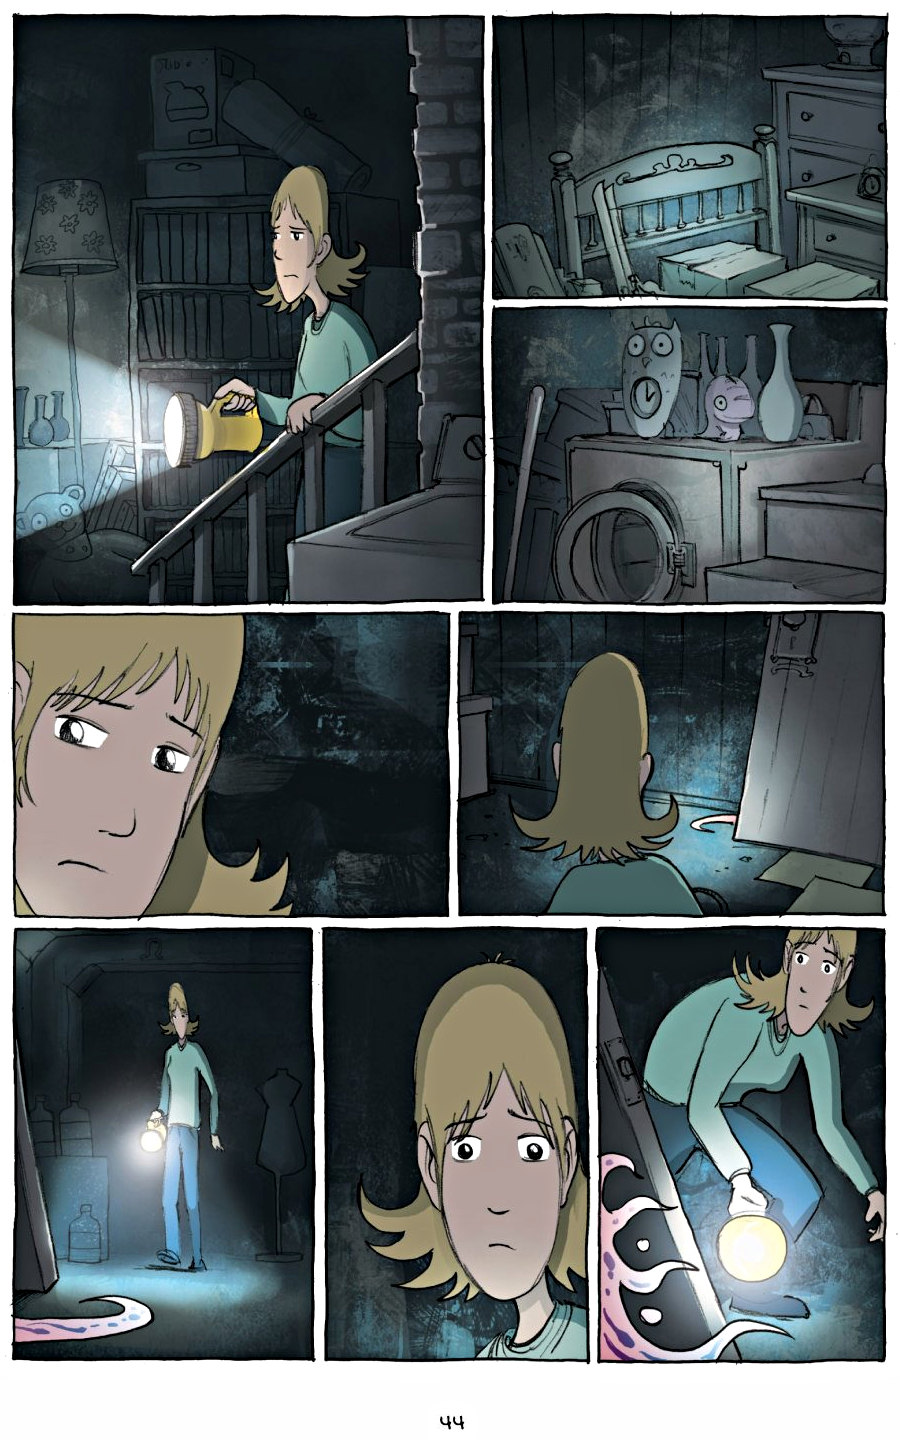 page 44 of amulet 1 stonekeeper graphic novel by kazu kibuishi - read online